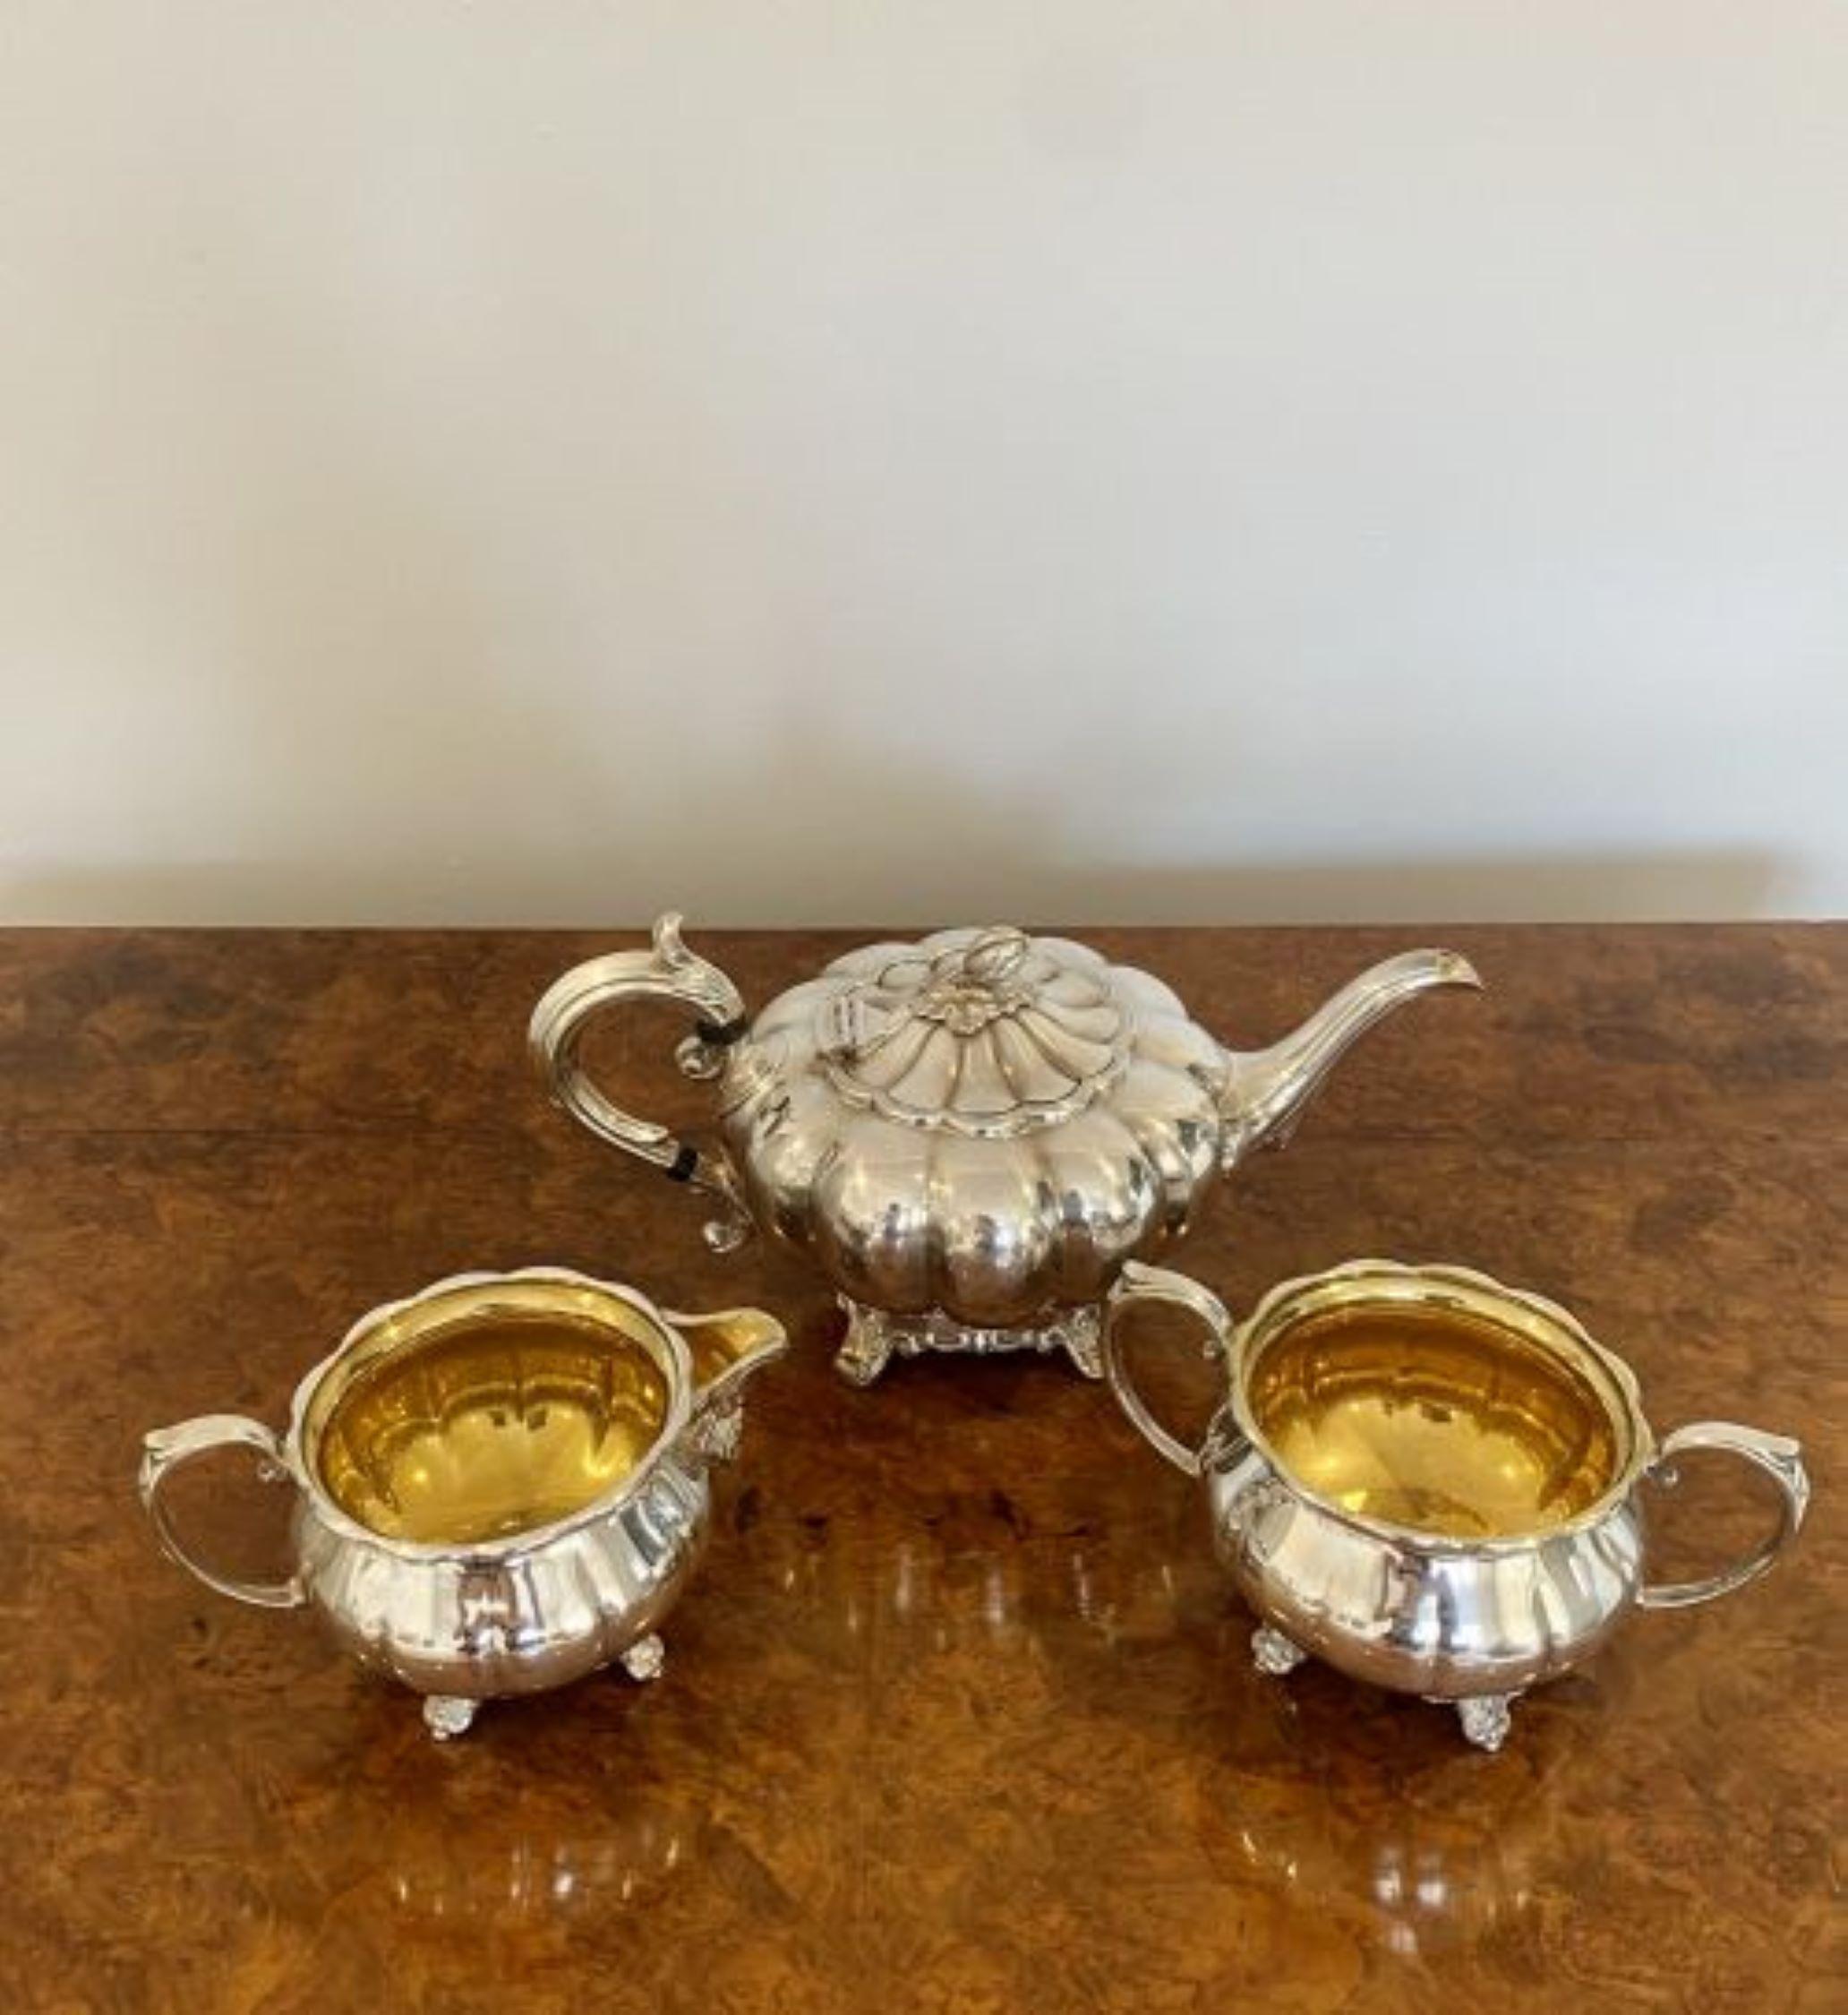 antique tea set markings